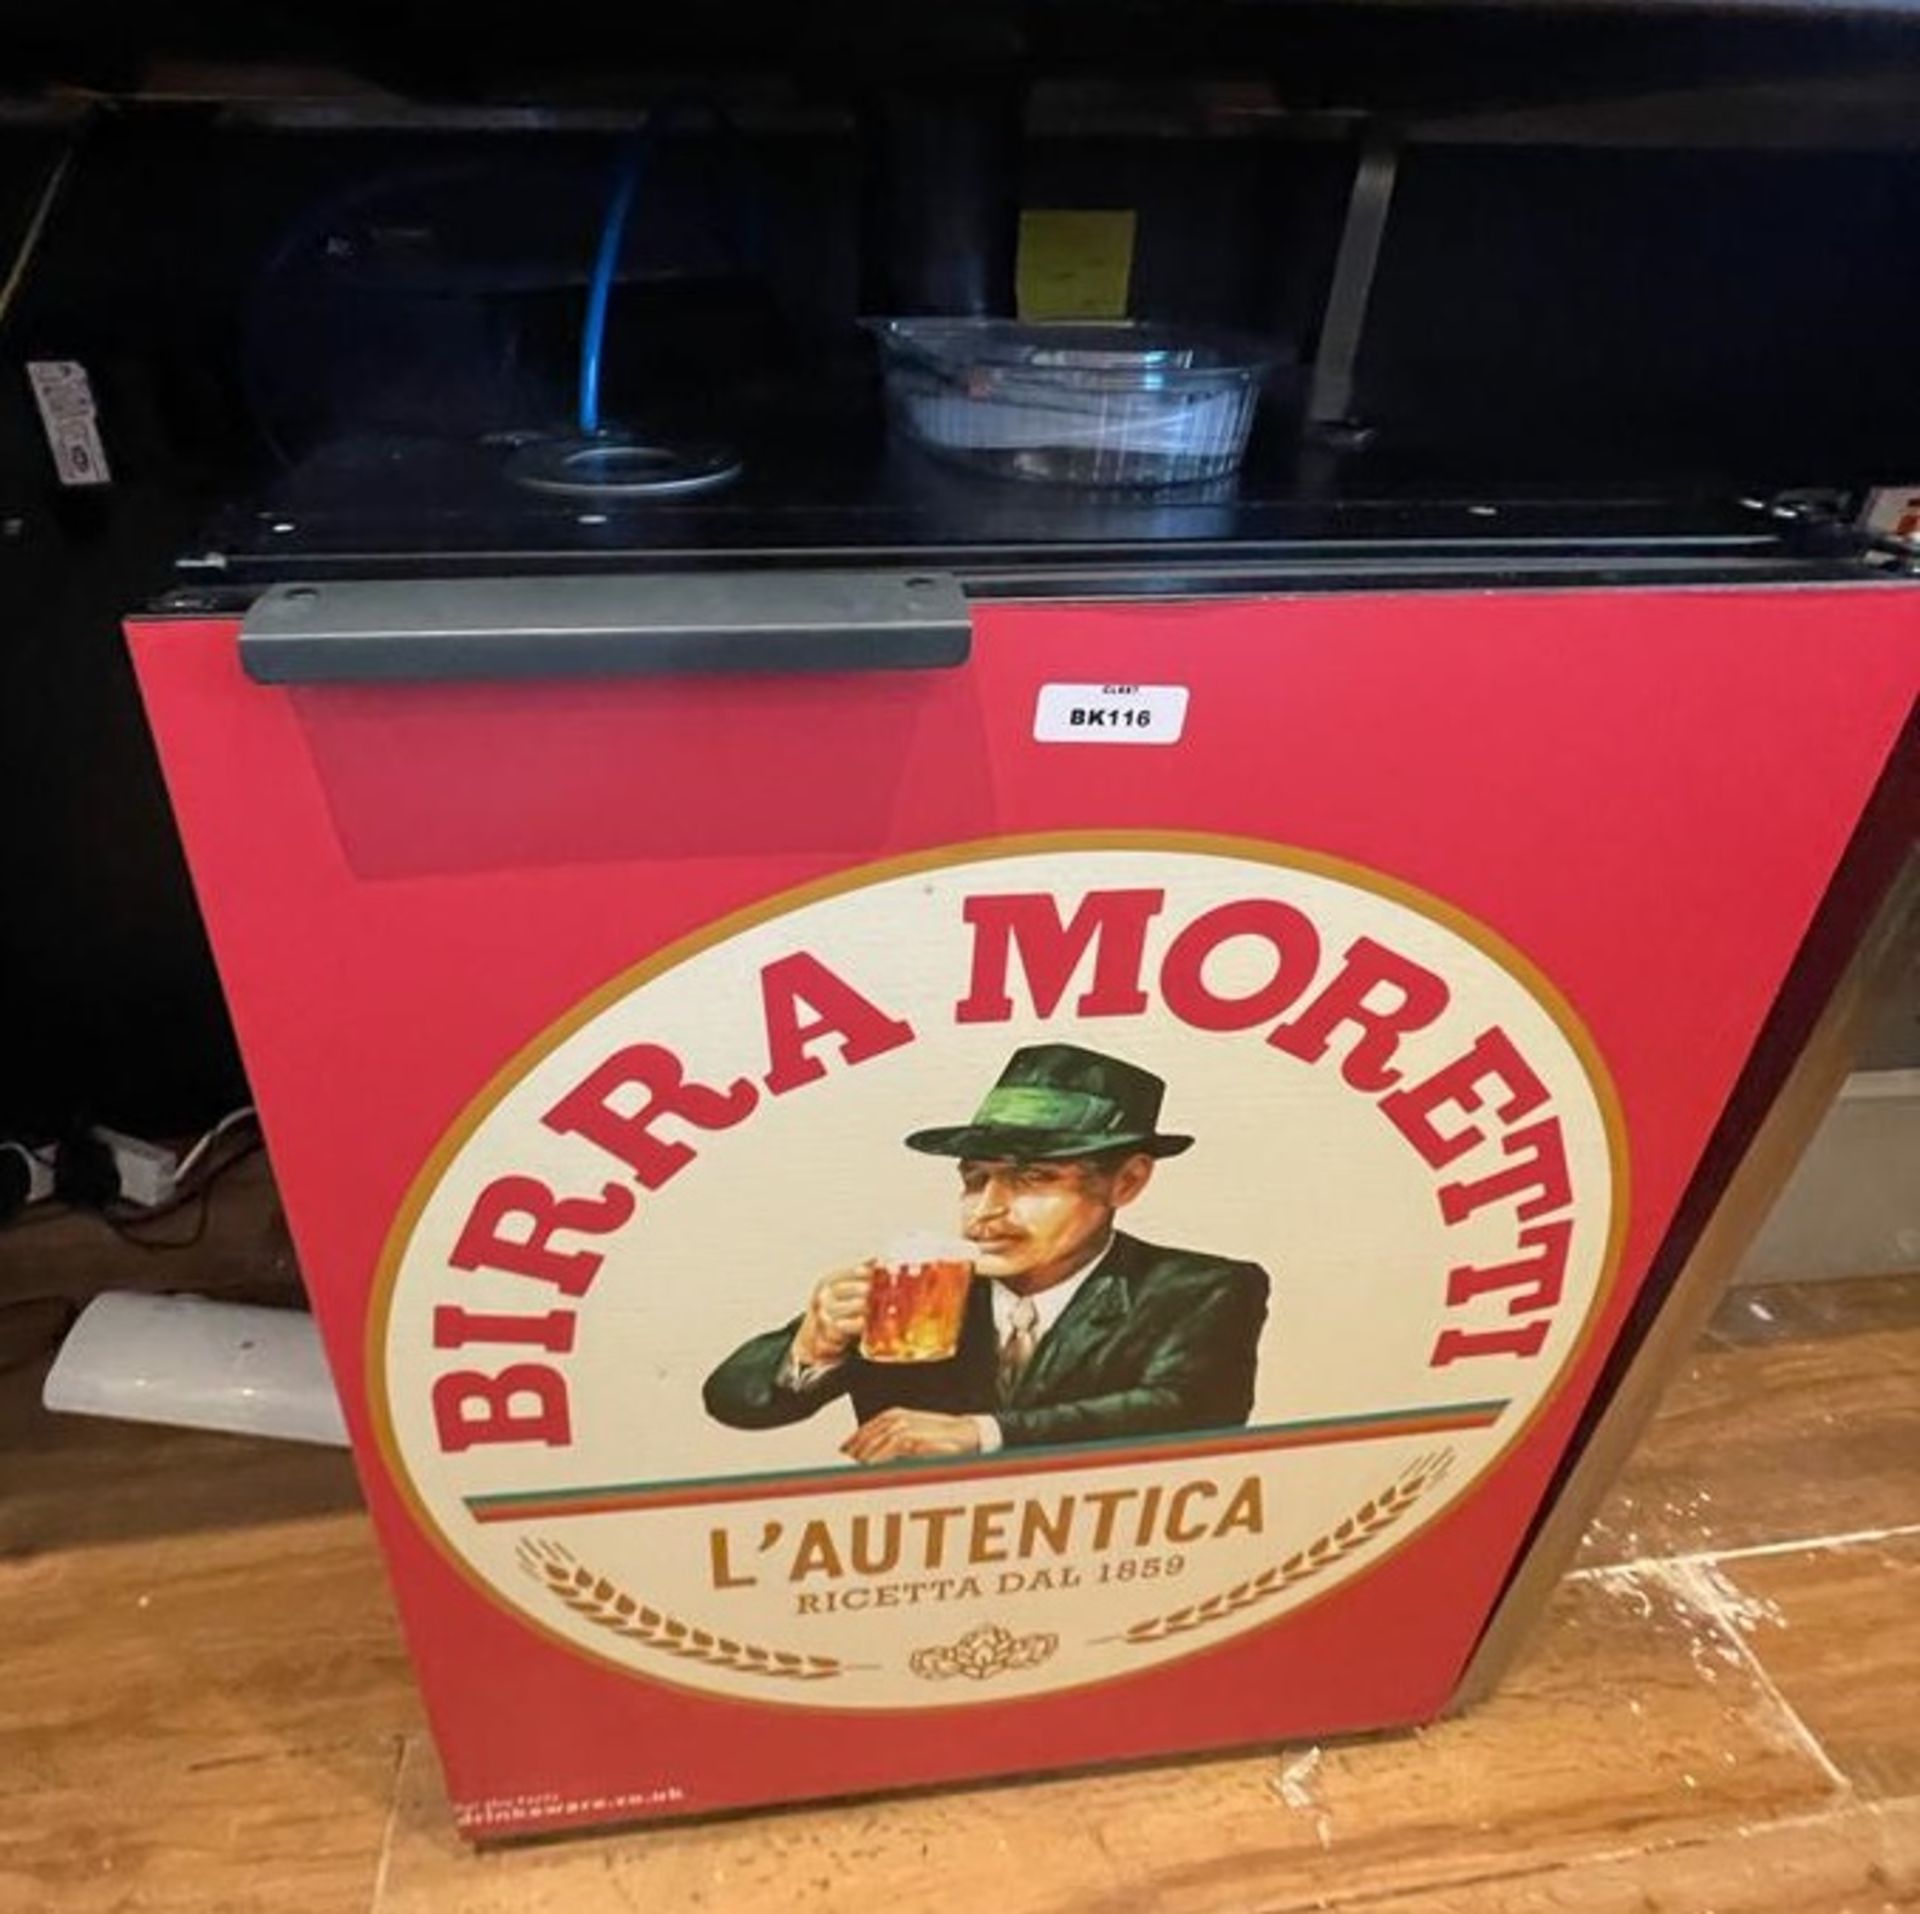 1 x Birra Moretti Refrigerated Beer Keg Dispenser - Ref: BK116 - CL686 - Location: Altrincham - Image 8 of 8